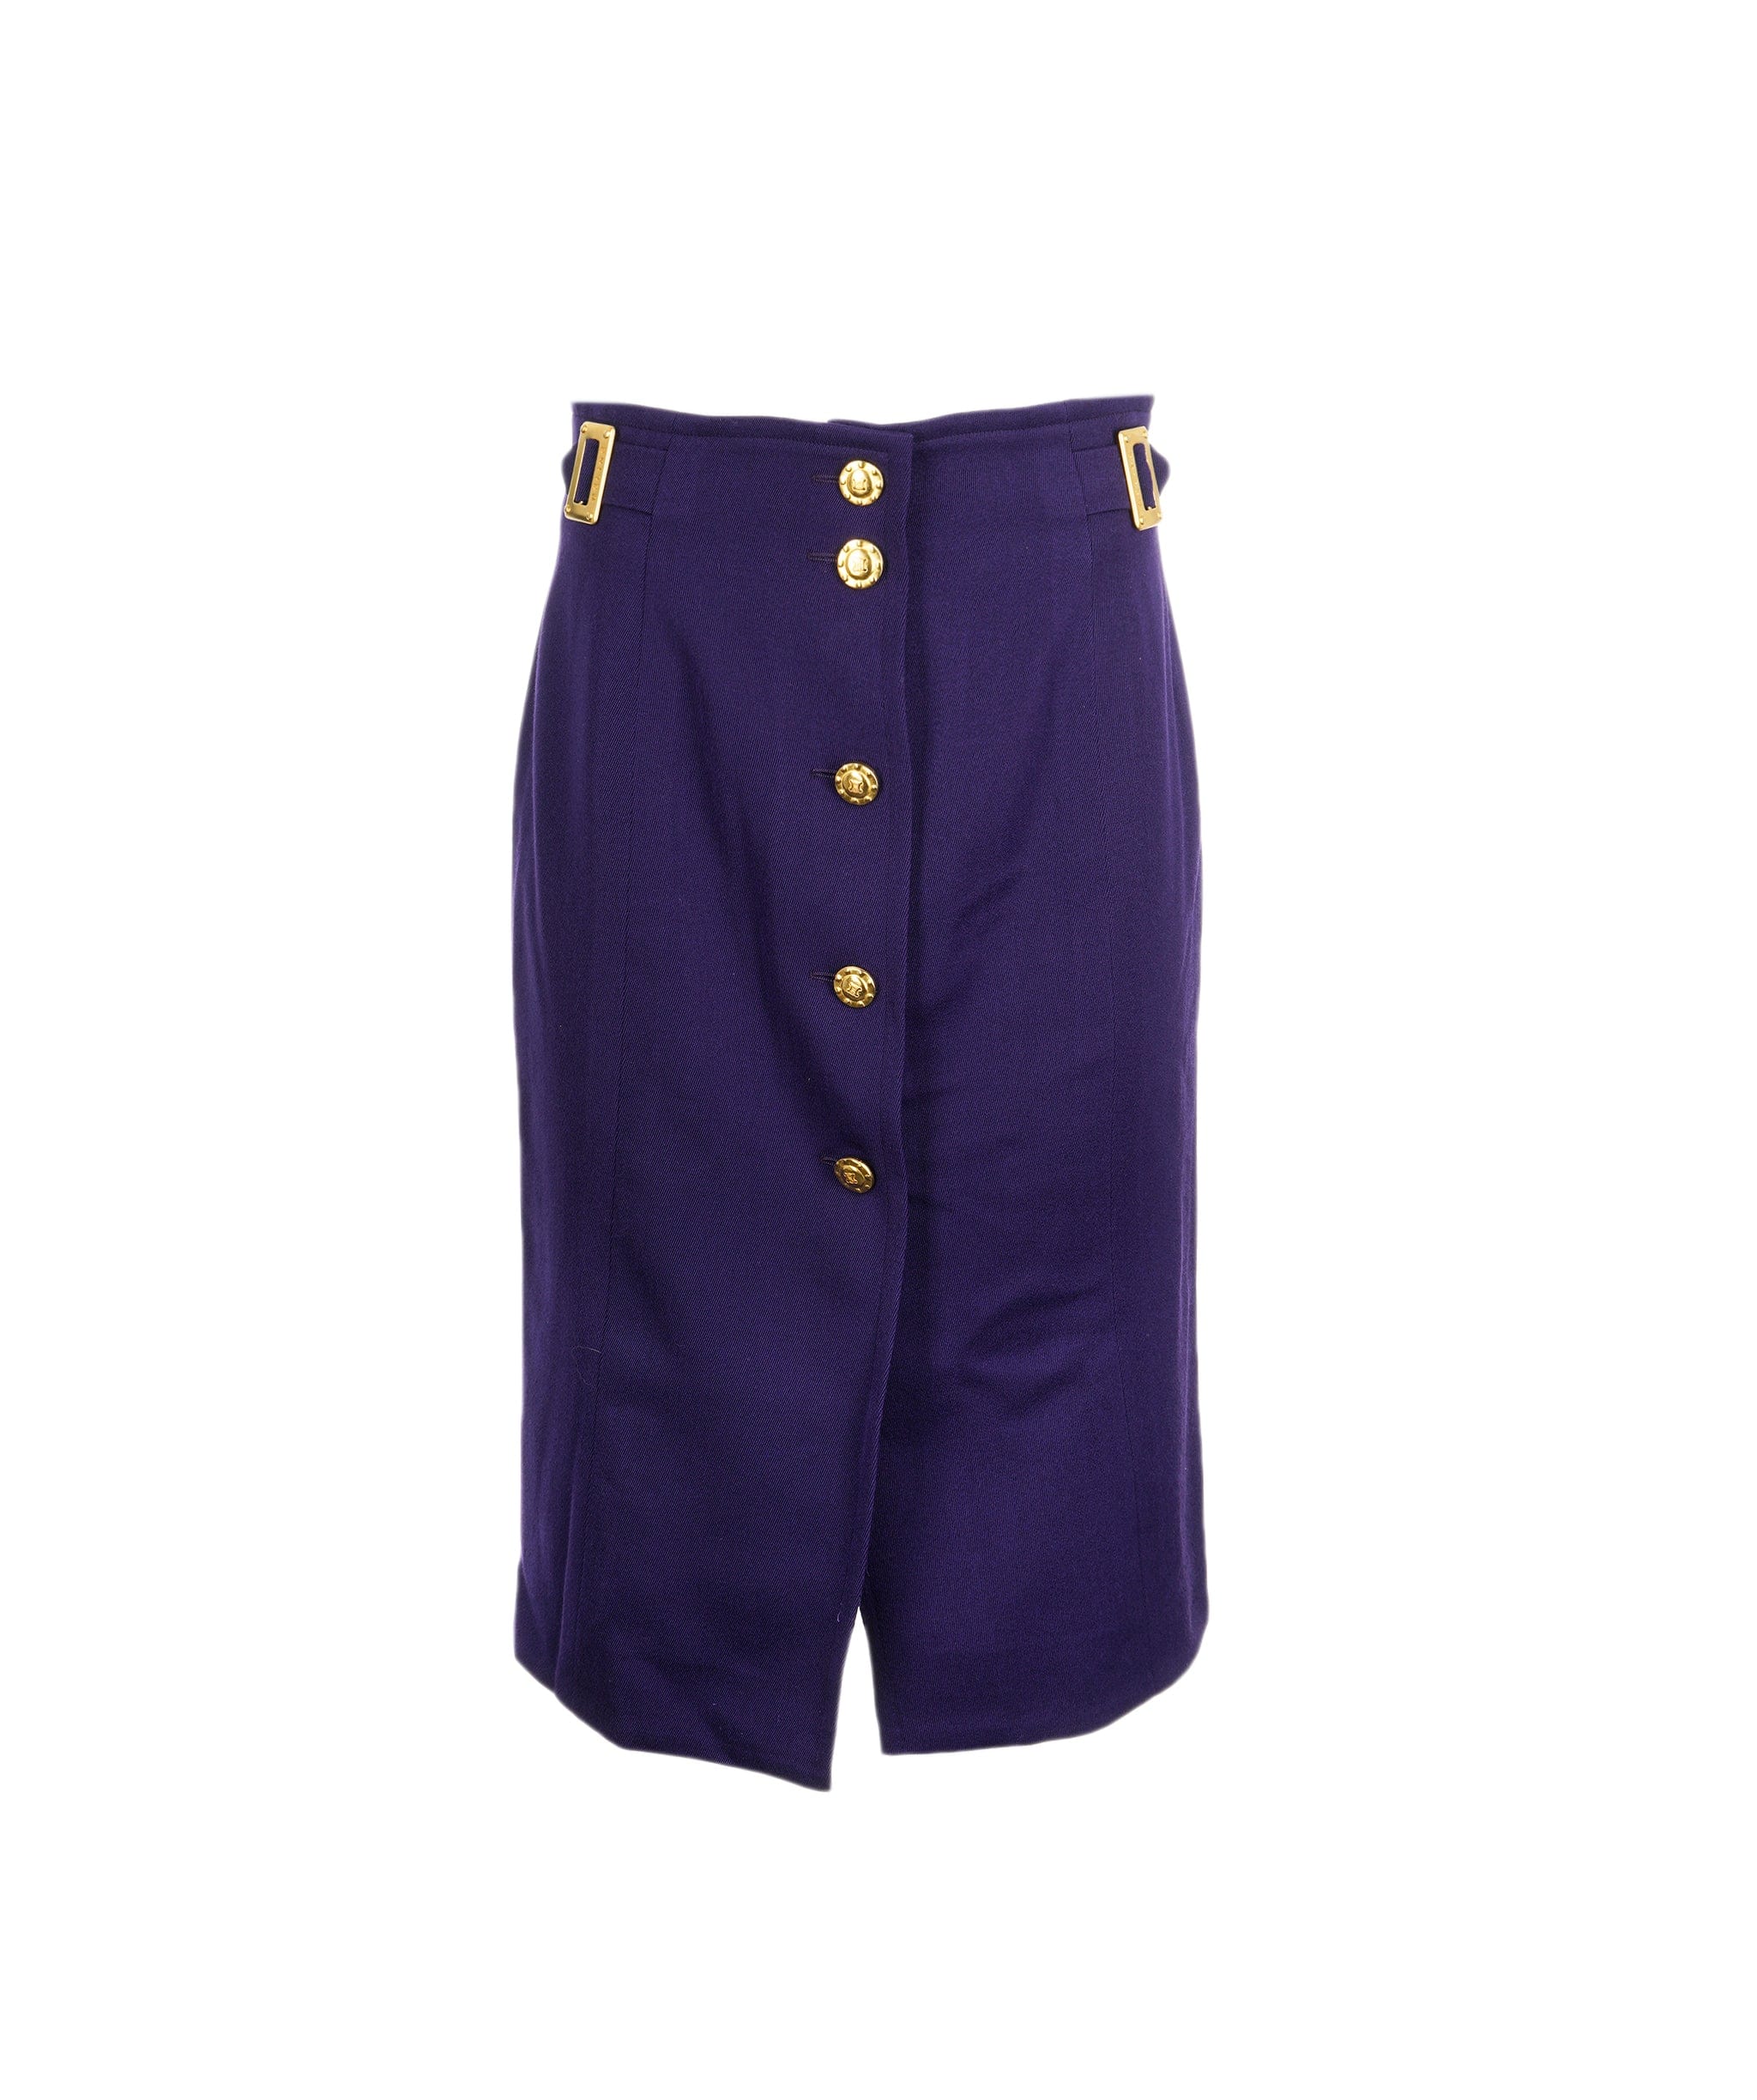 Chanel Celine Gold Button Skirt Purple ASL8262